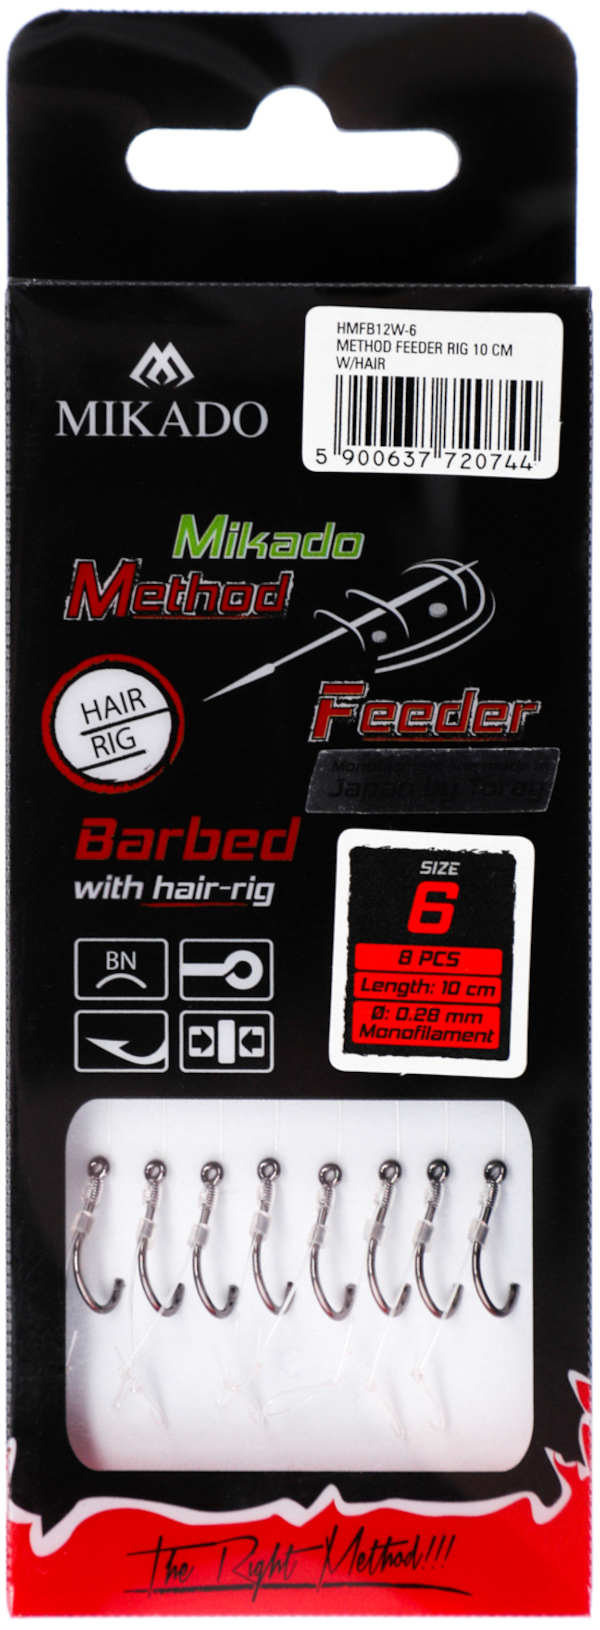 Mikado Method Feeder Rig With Hair 8 pezzi